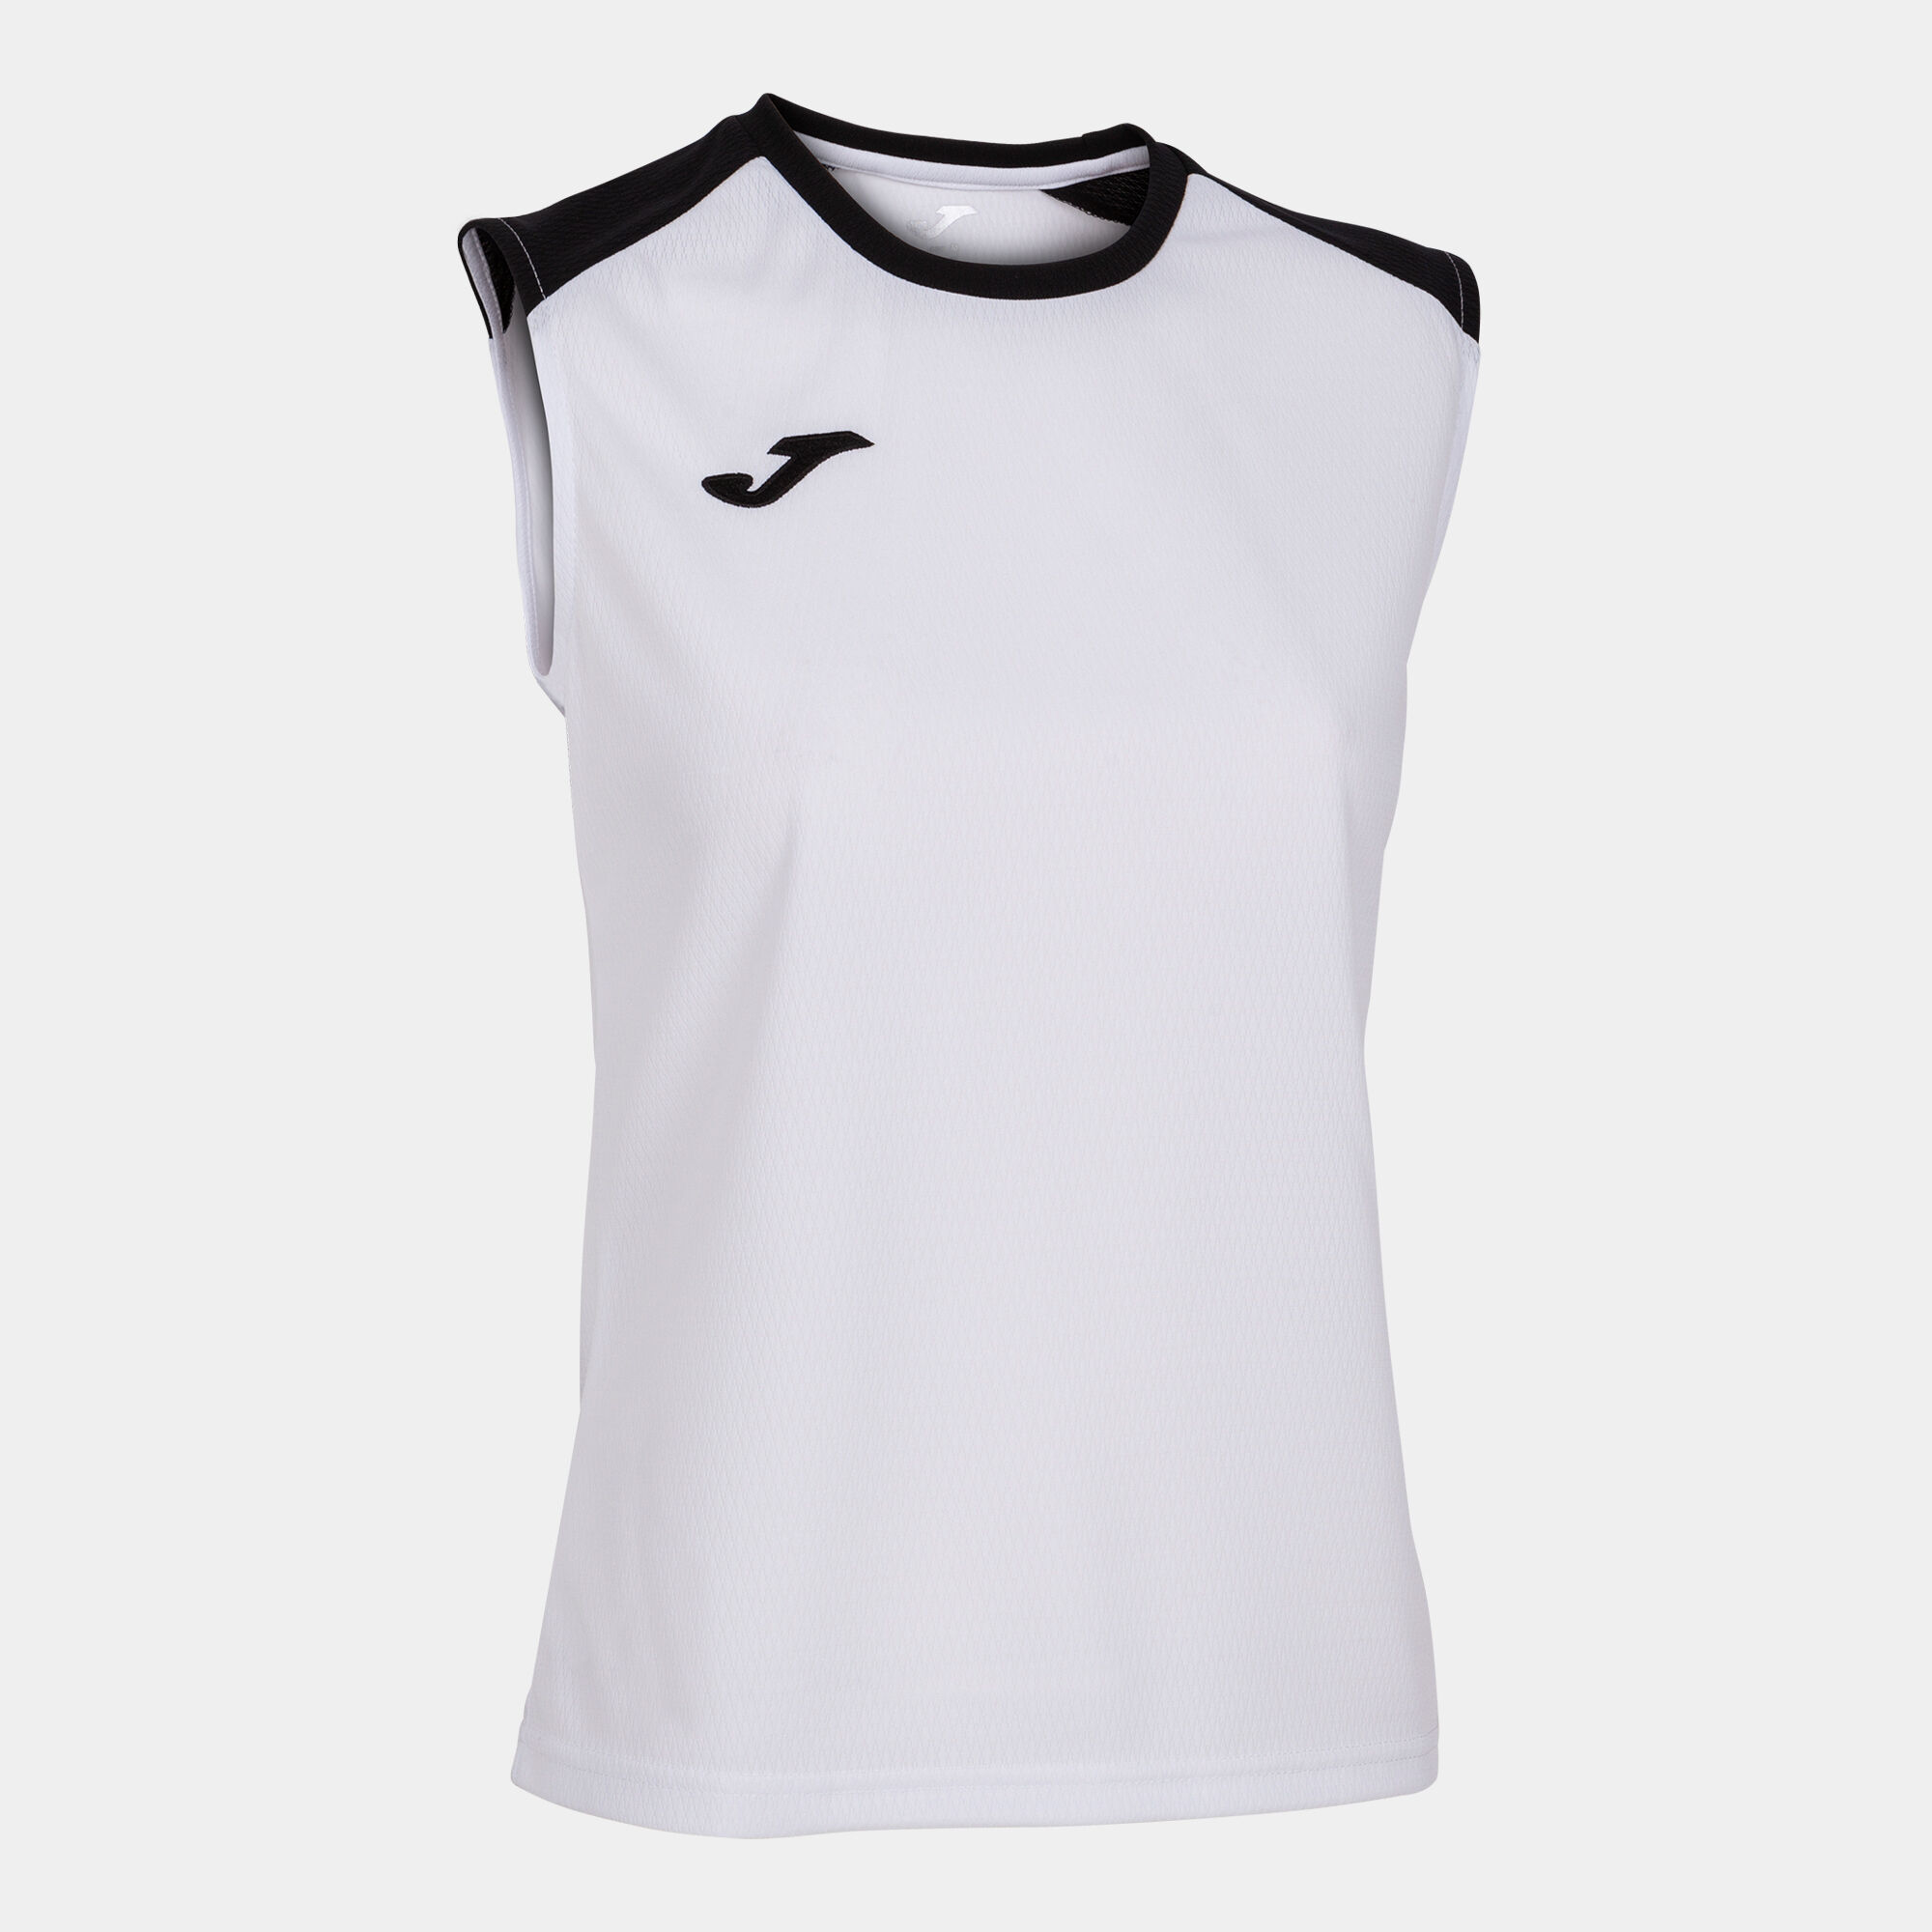 T-shirt de alça mulher Eco Championship branco preto